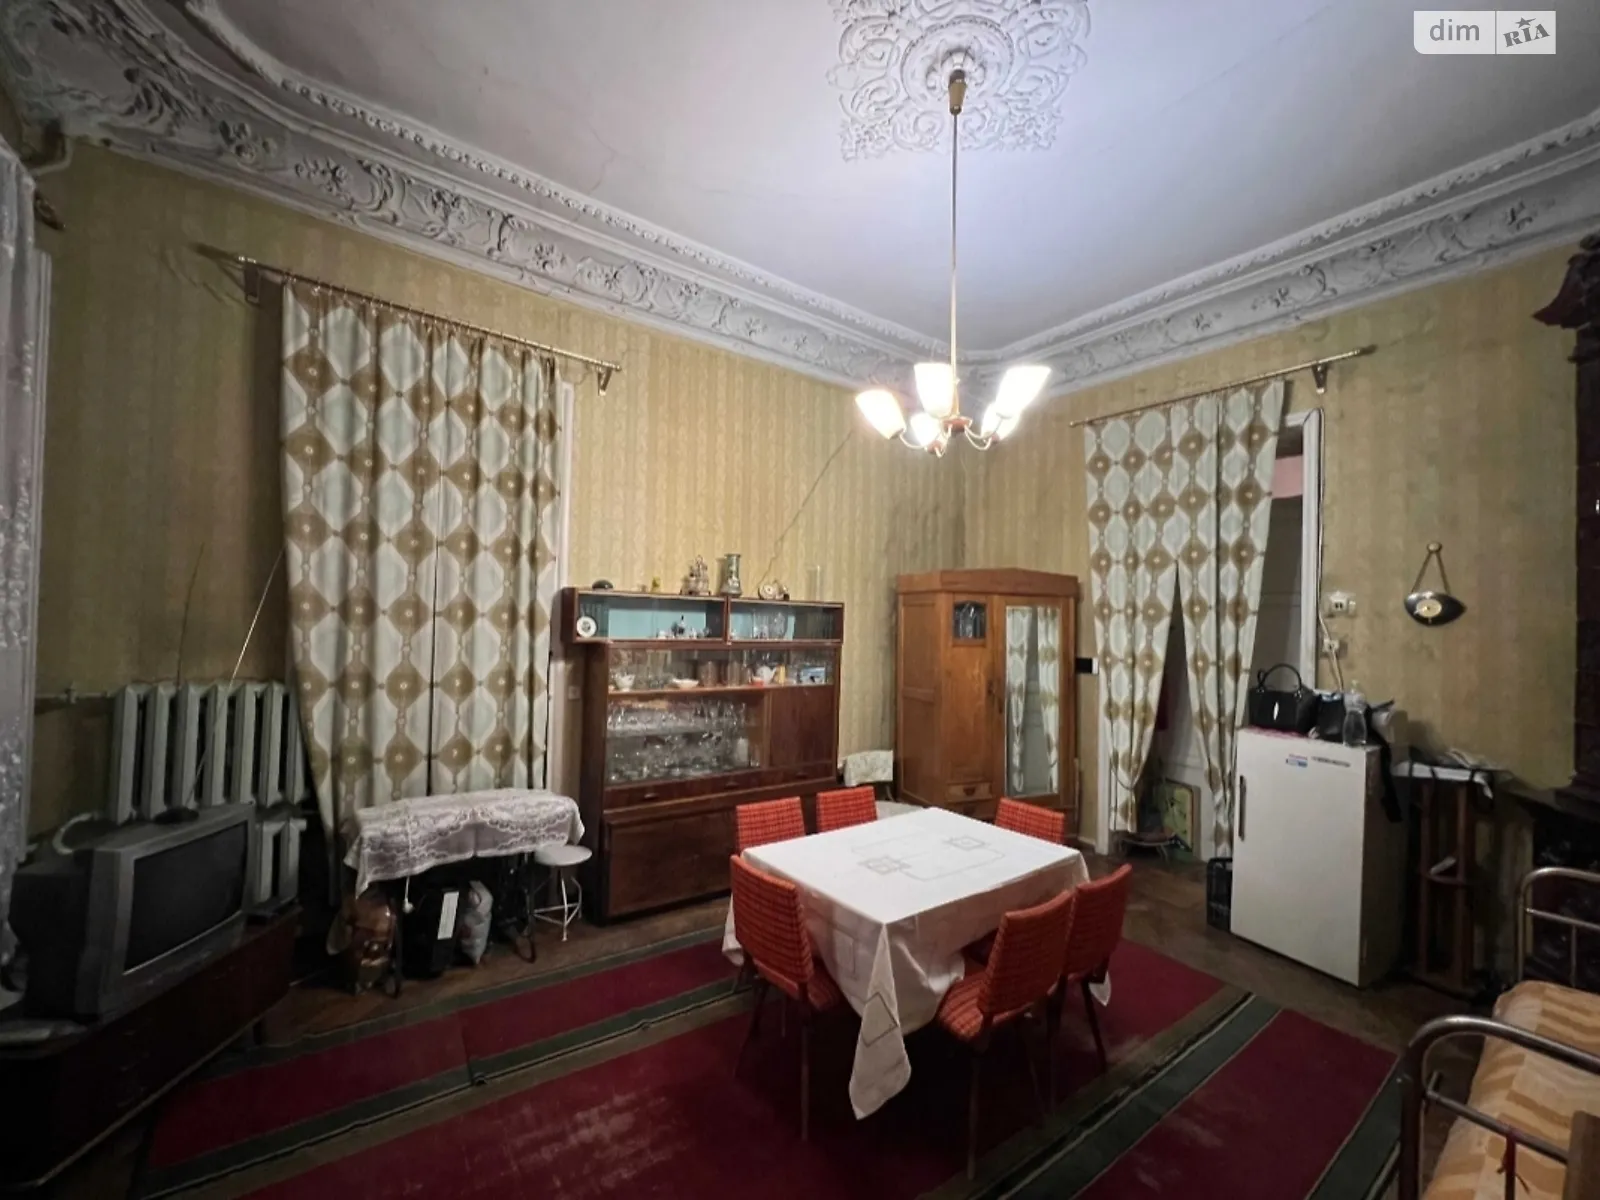 Продается комната 42 кв. м в Одессе, цена: 15000 $ - фото 1